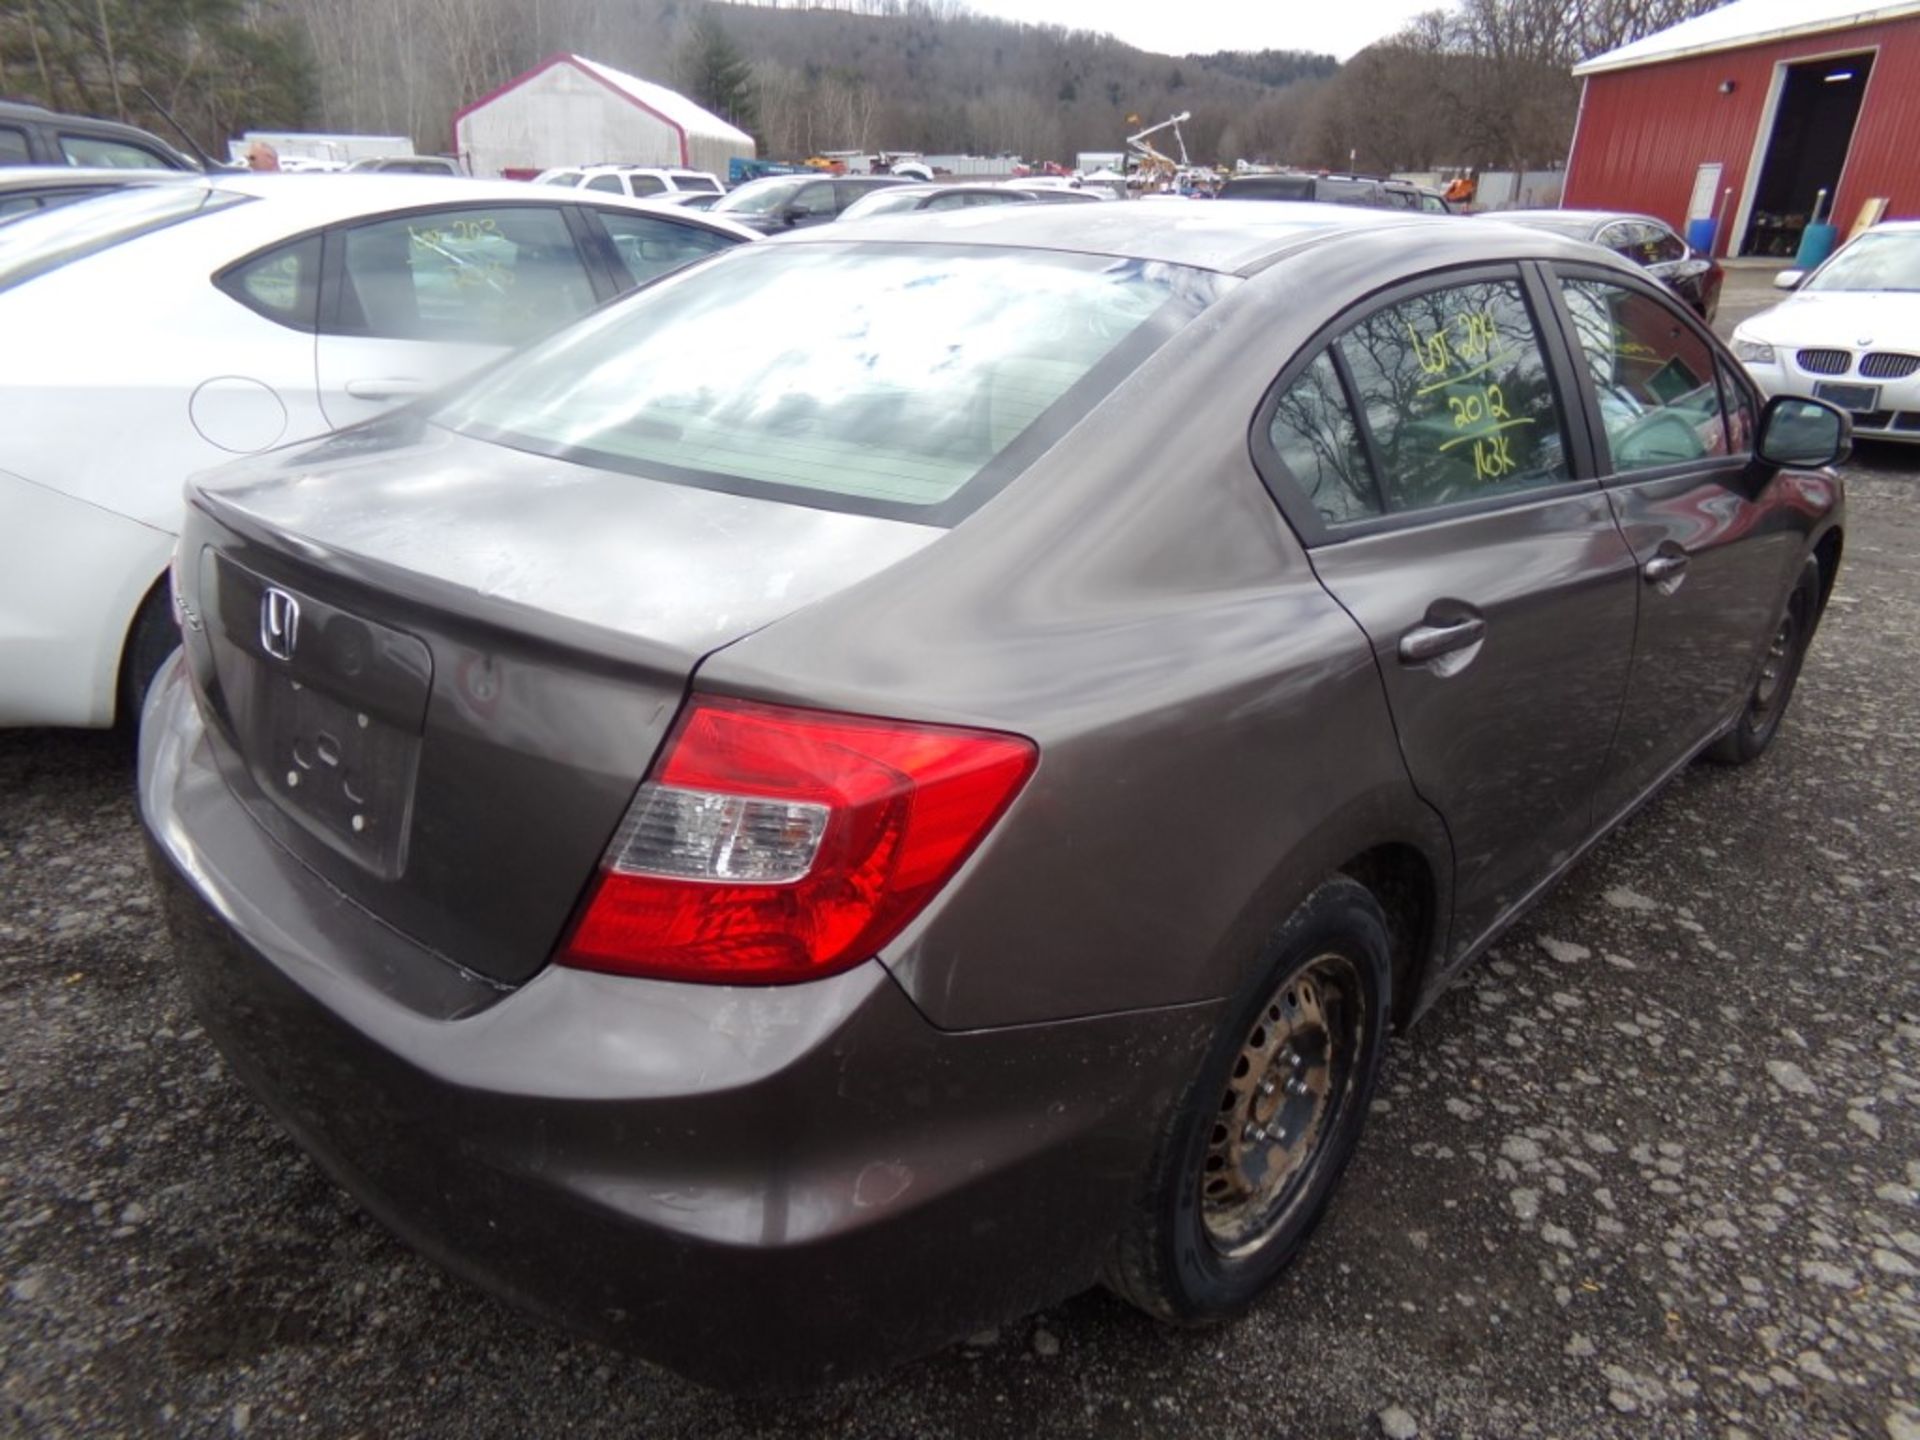 2012 Honda Civic LX, Gray, 163,644 Miles, VIN#: 2HGFB2F55CH572783, CRACKED WINDSHIELD, PAINT FADED - Bild 3 aus 11